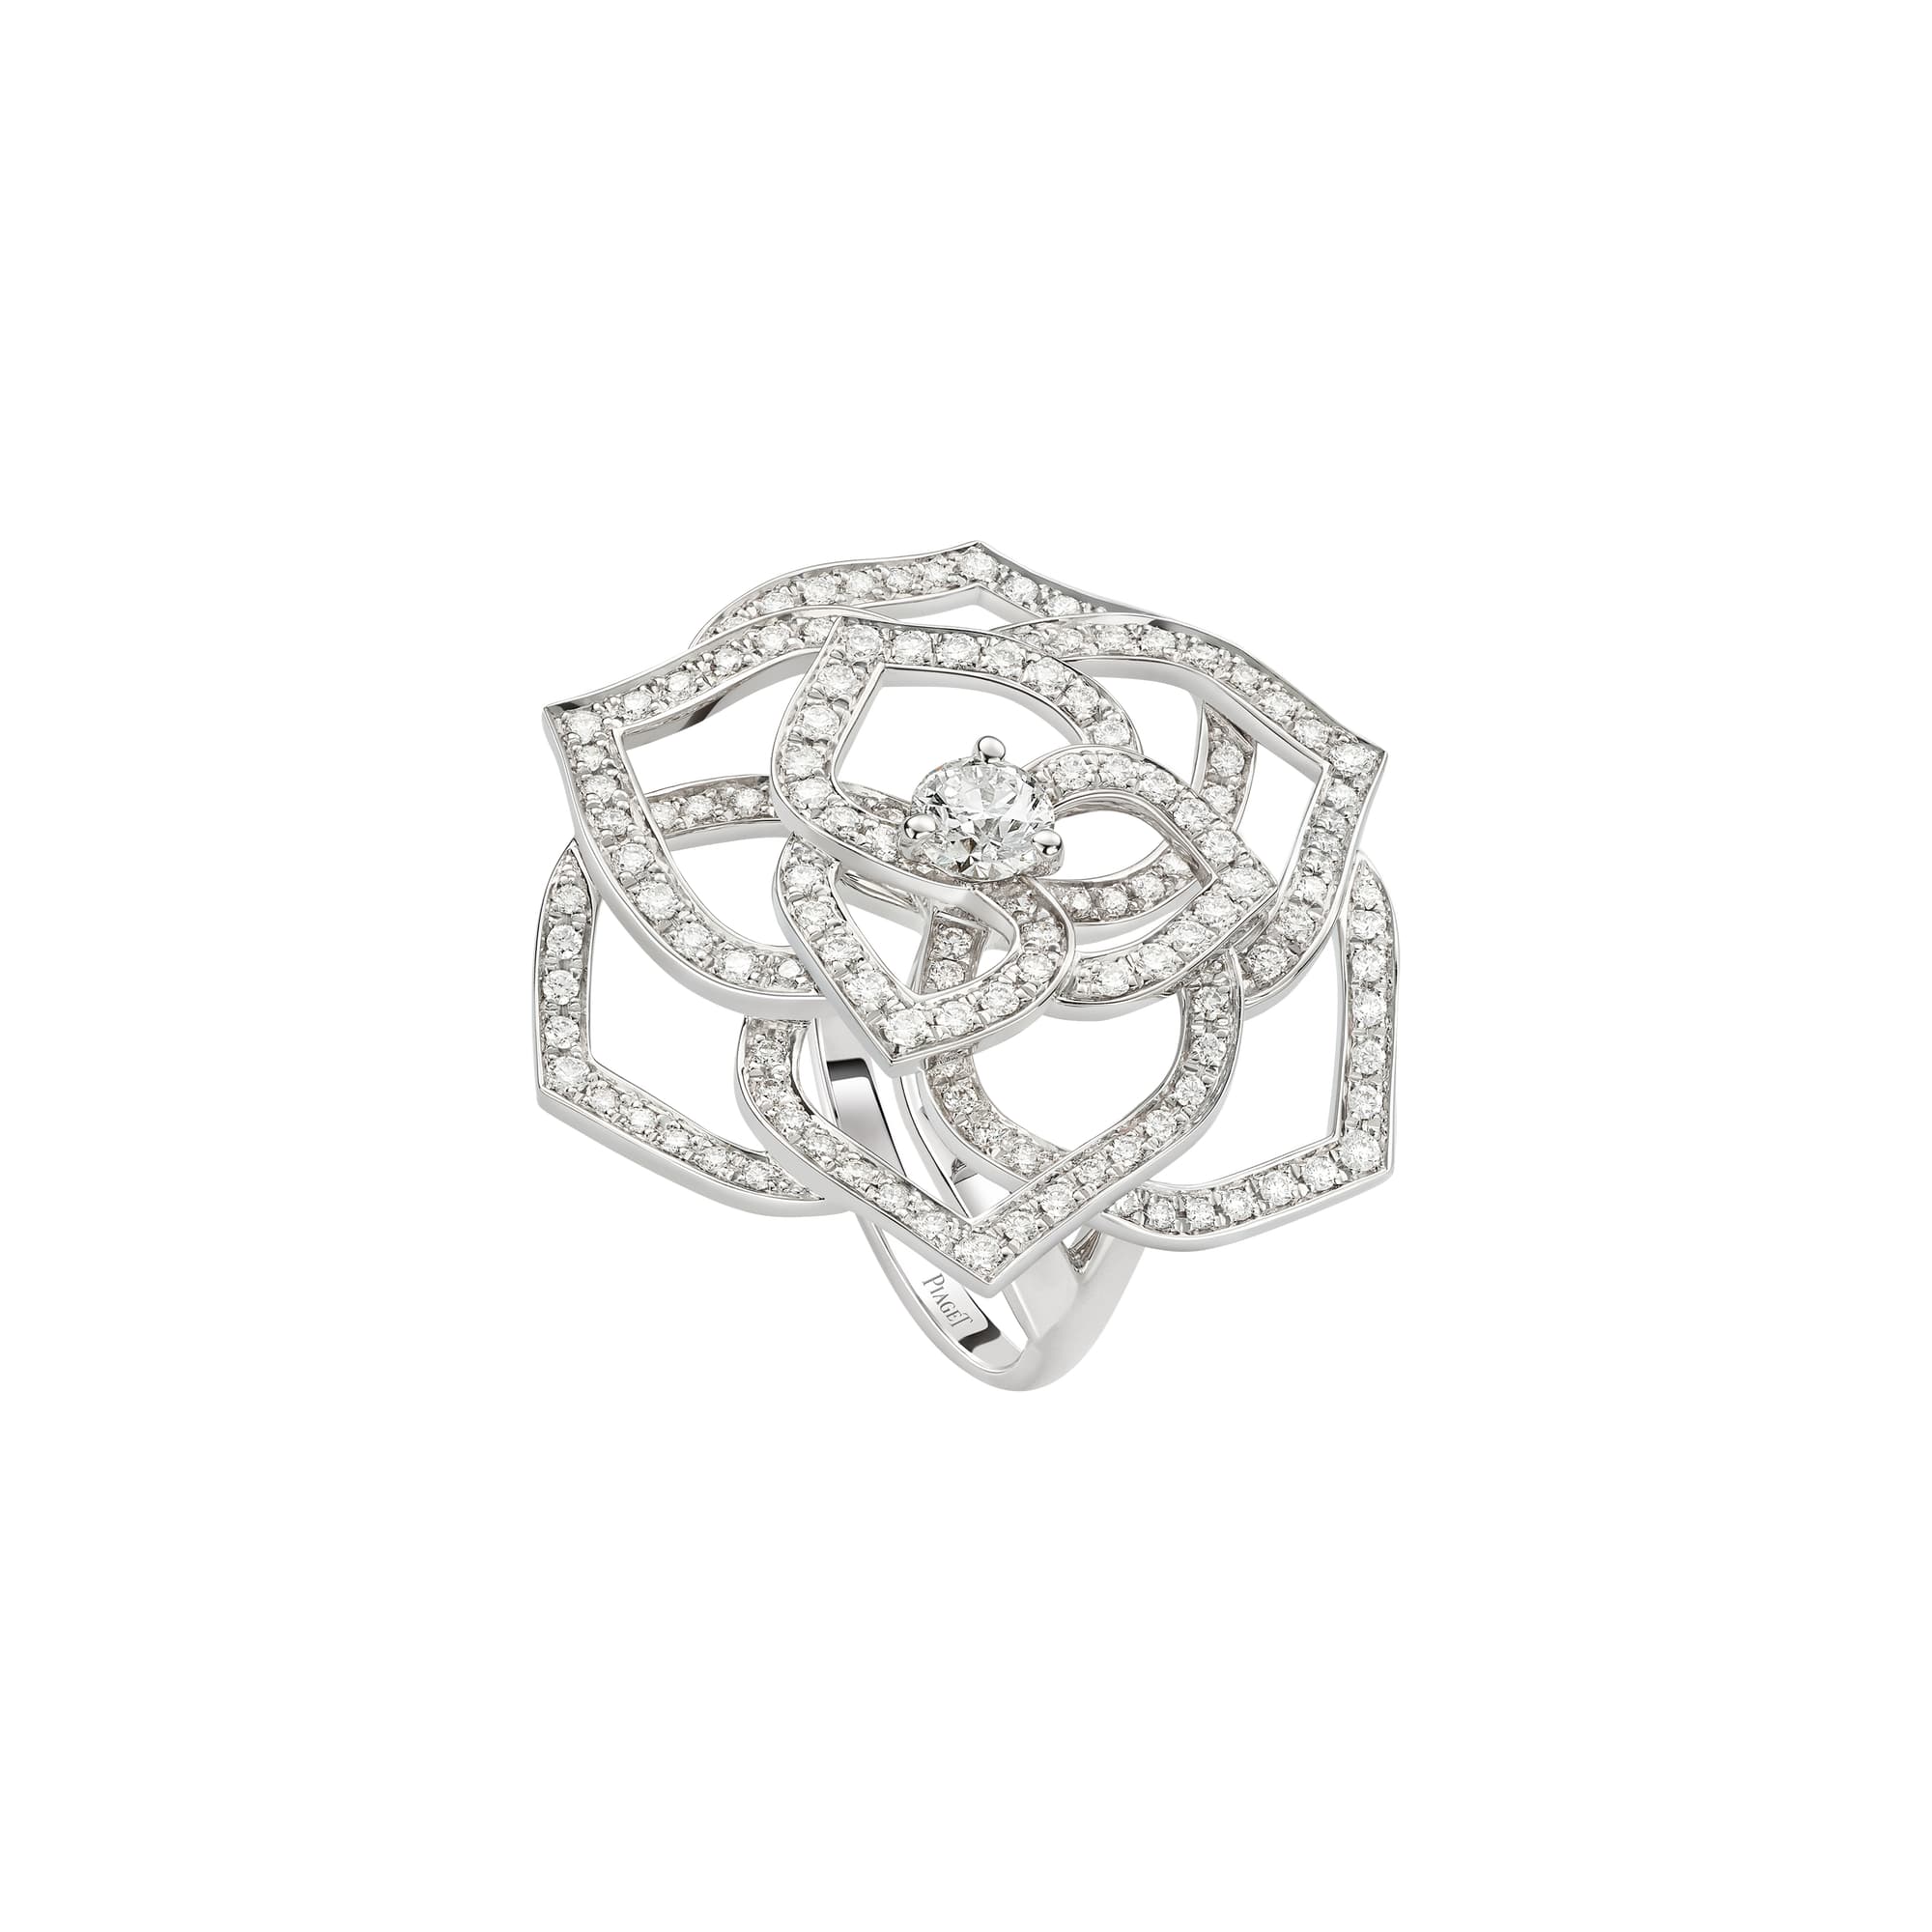 White gold Diamond Ring G34UV700 - Piaget Luxury Jewelry Online